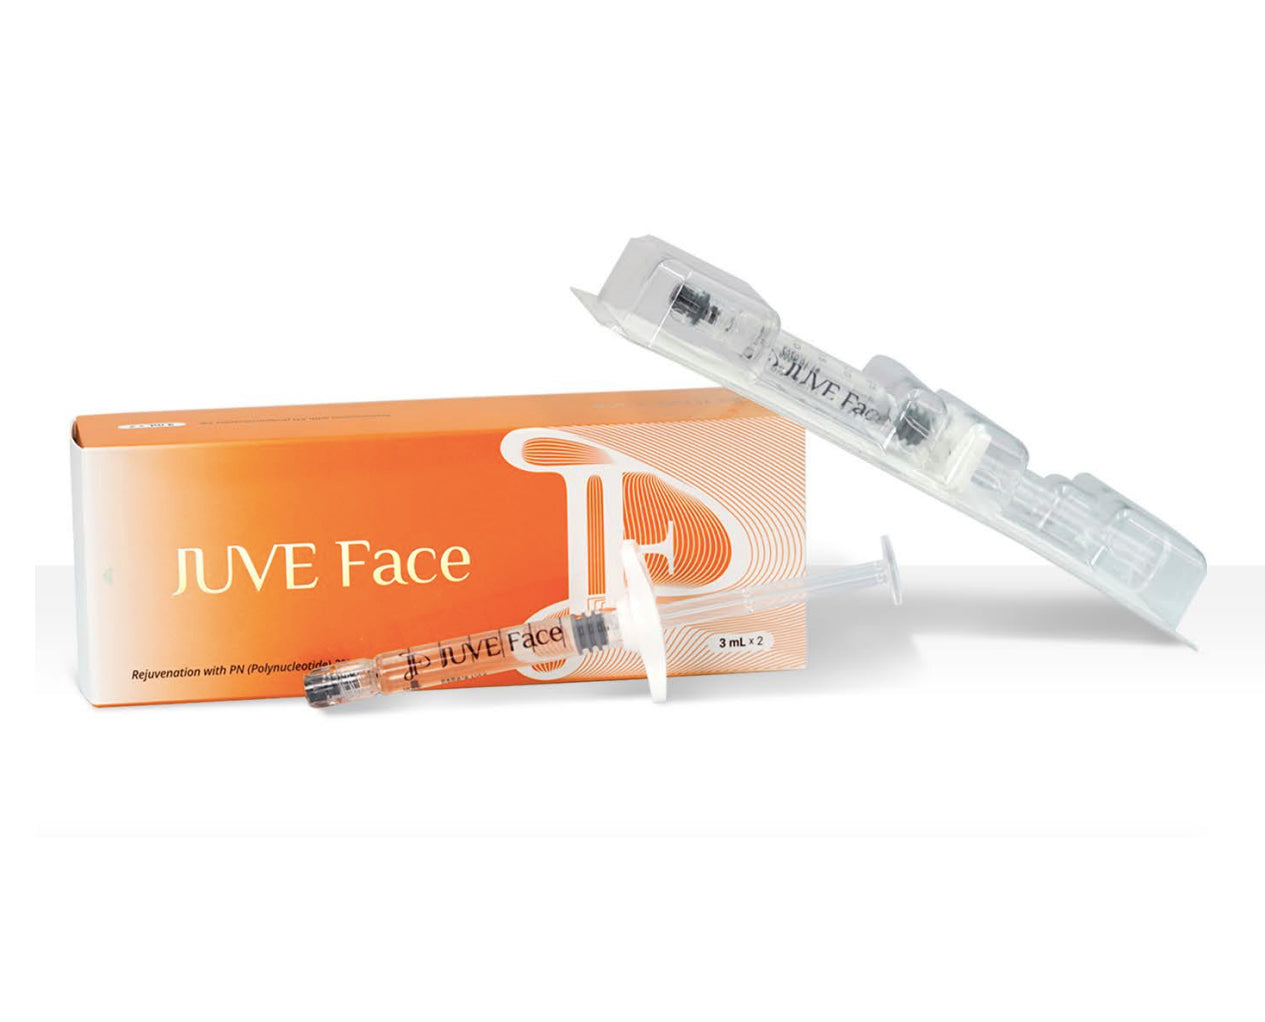 Juve Face 3ml x 2 PN Skin Booster Skin Rejuvenation Aesthetics Product